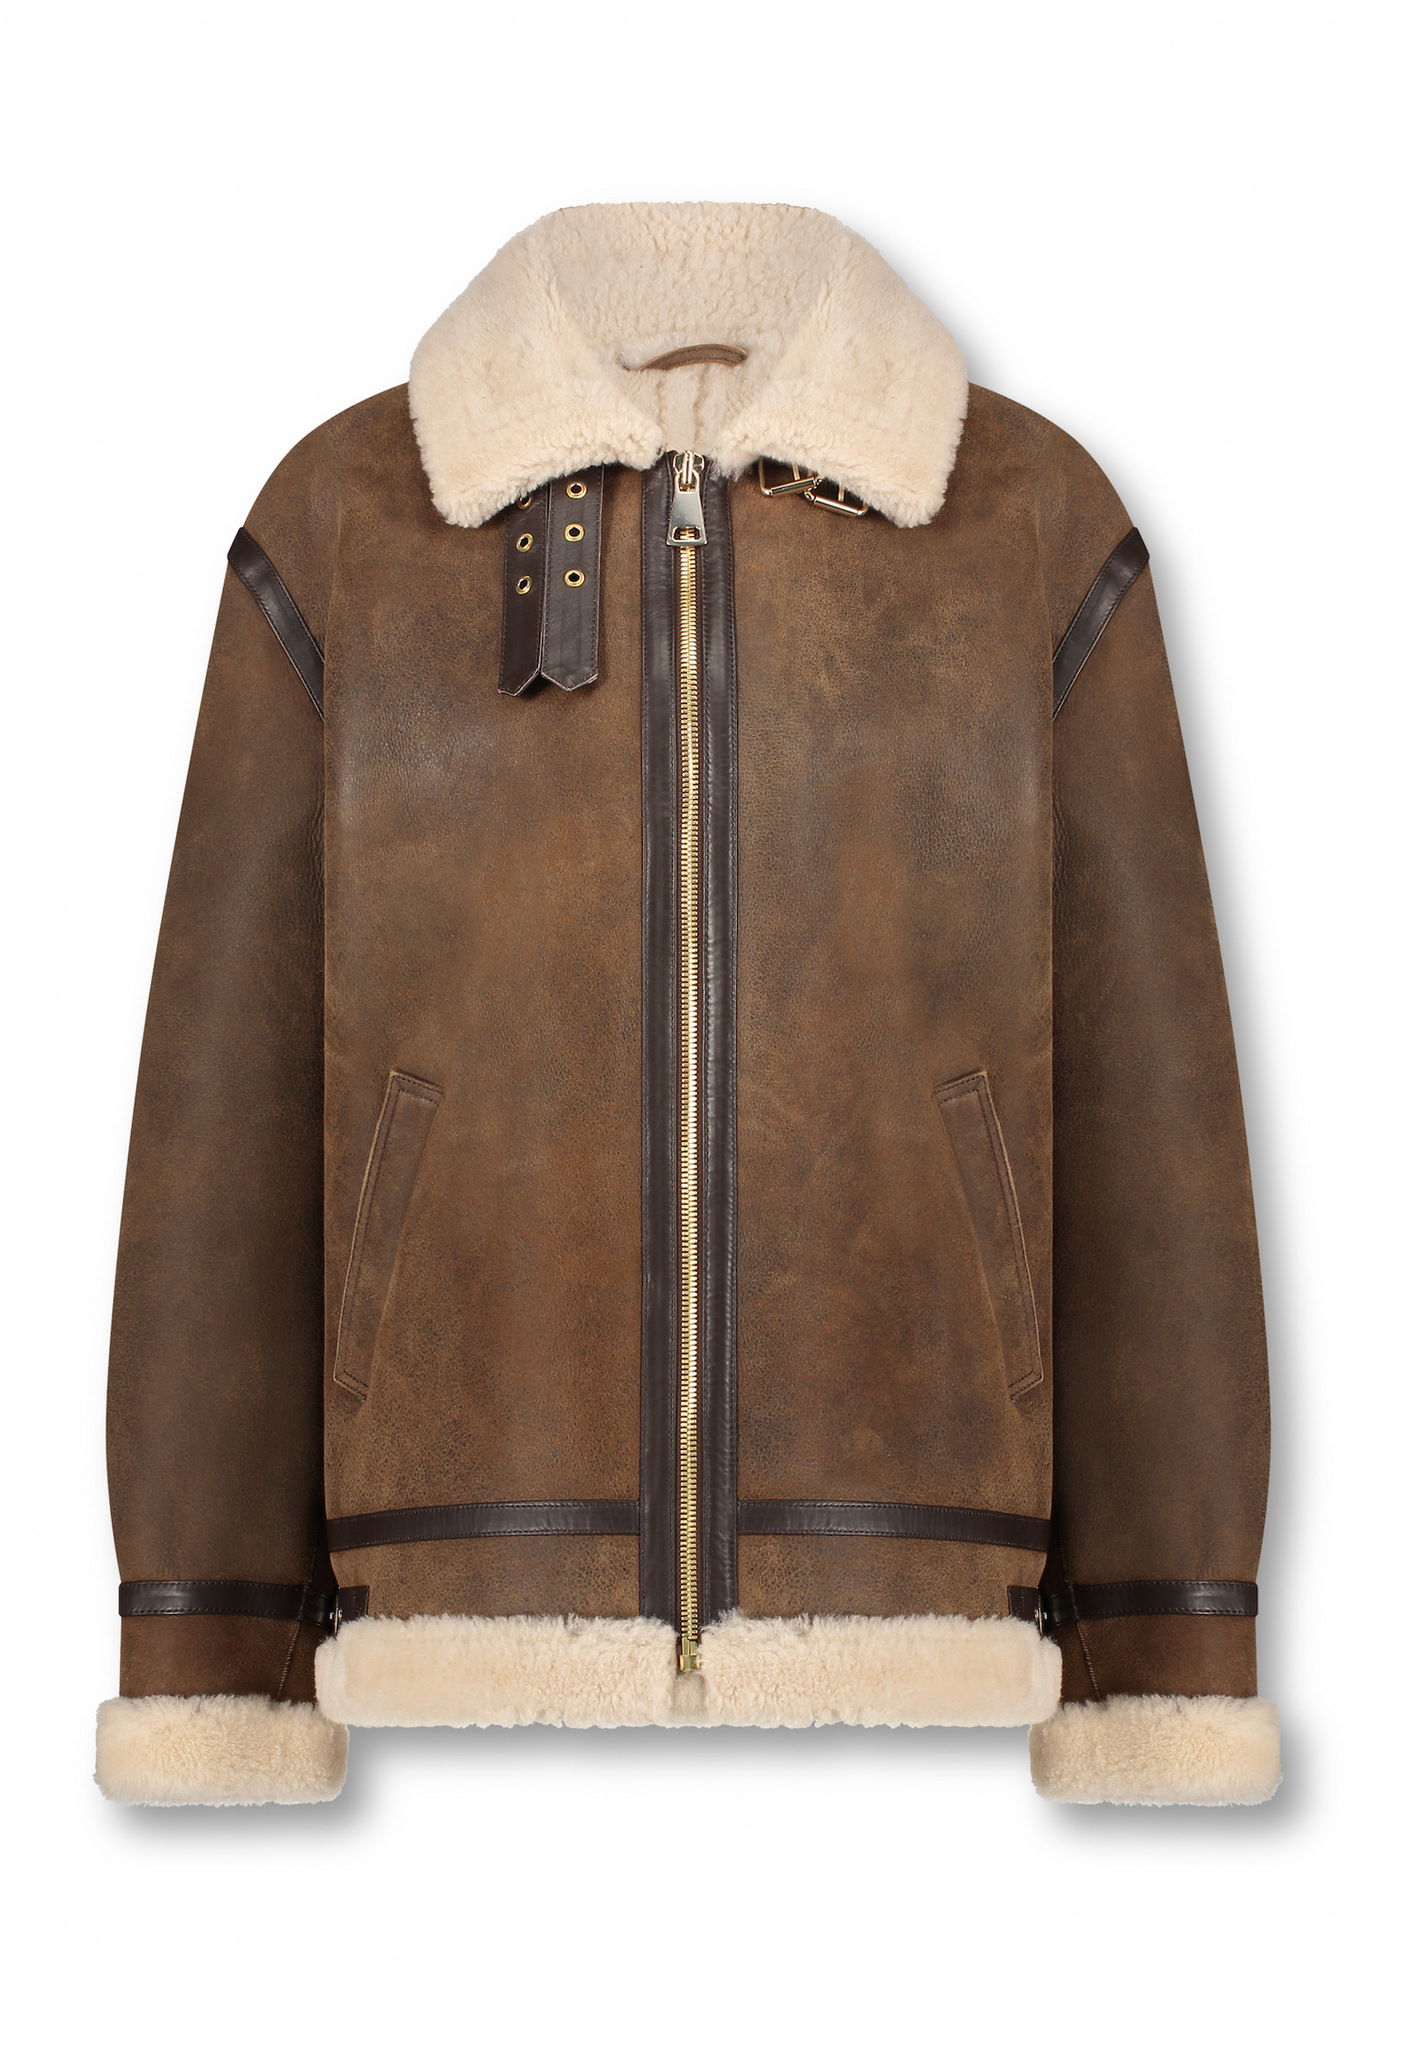 Arma aviator inspired shearling jacket